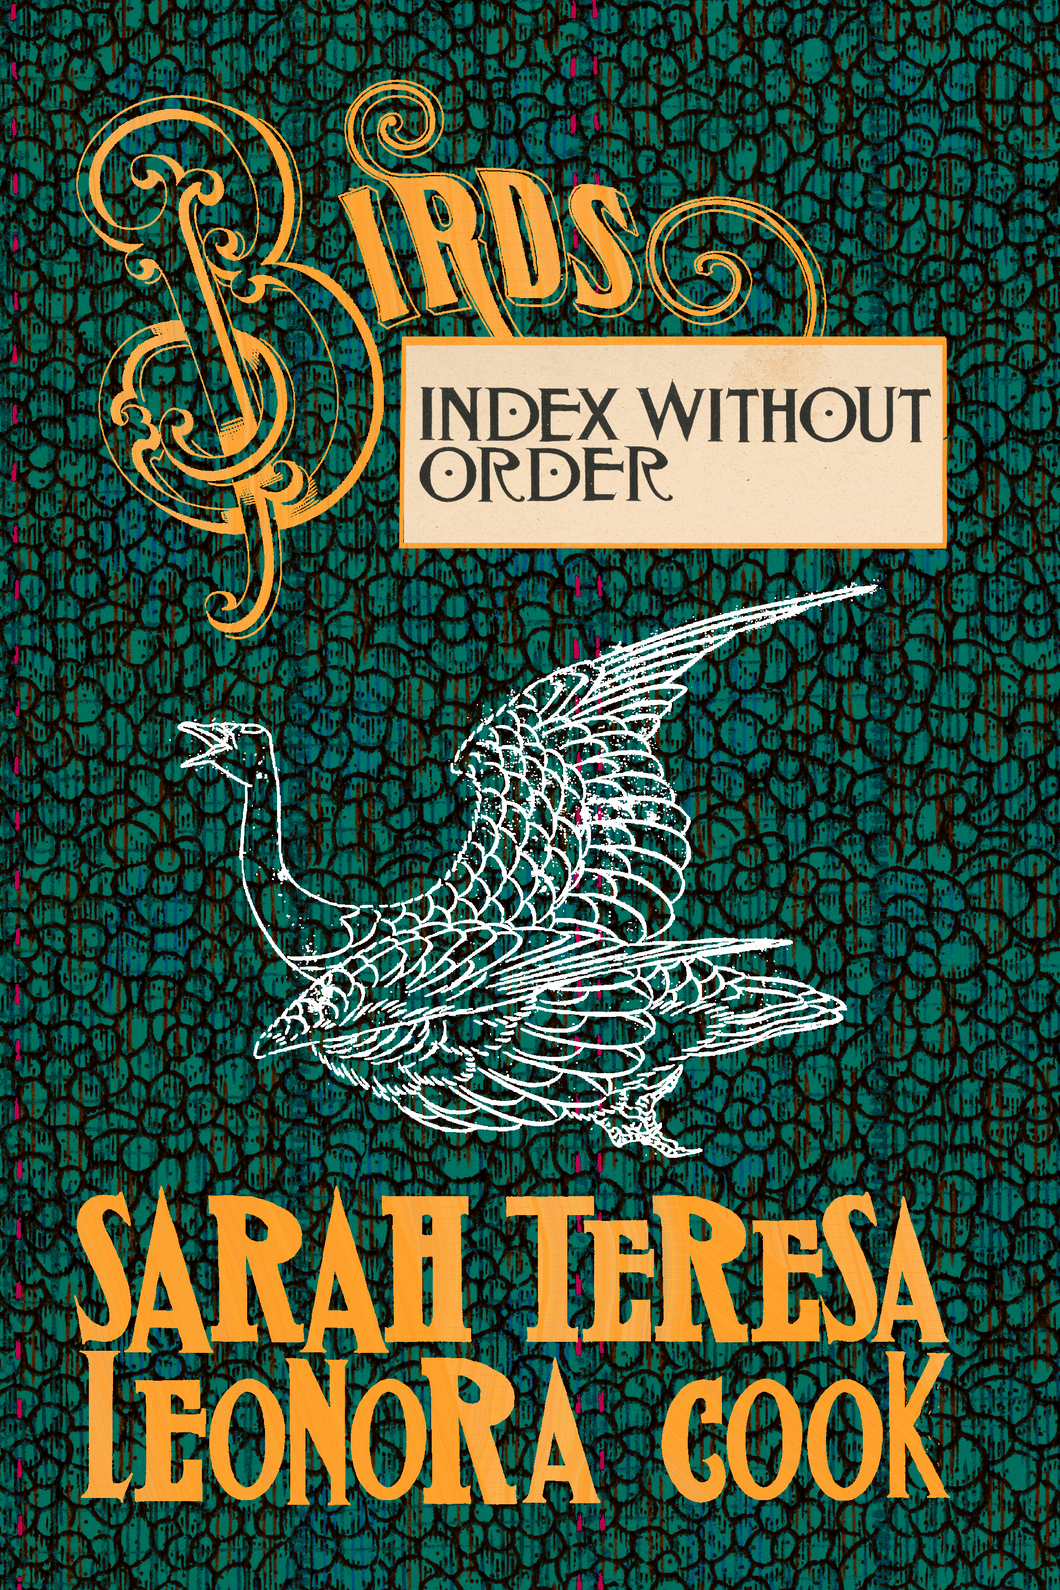 Birds (index without order), by Sarah Teresa Leonora Cook-Print Books-Bottlecap Press